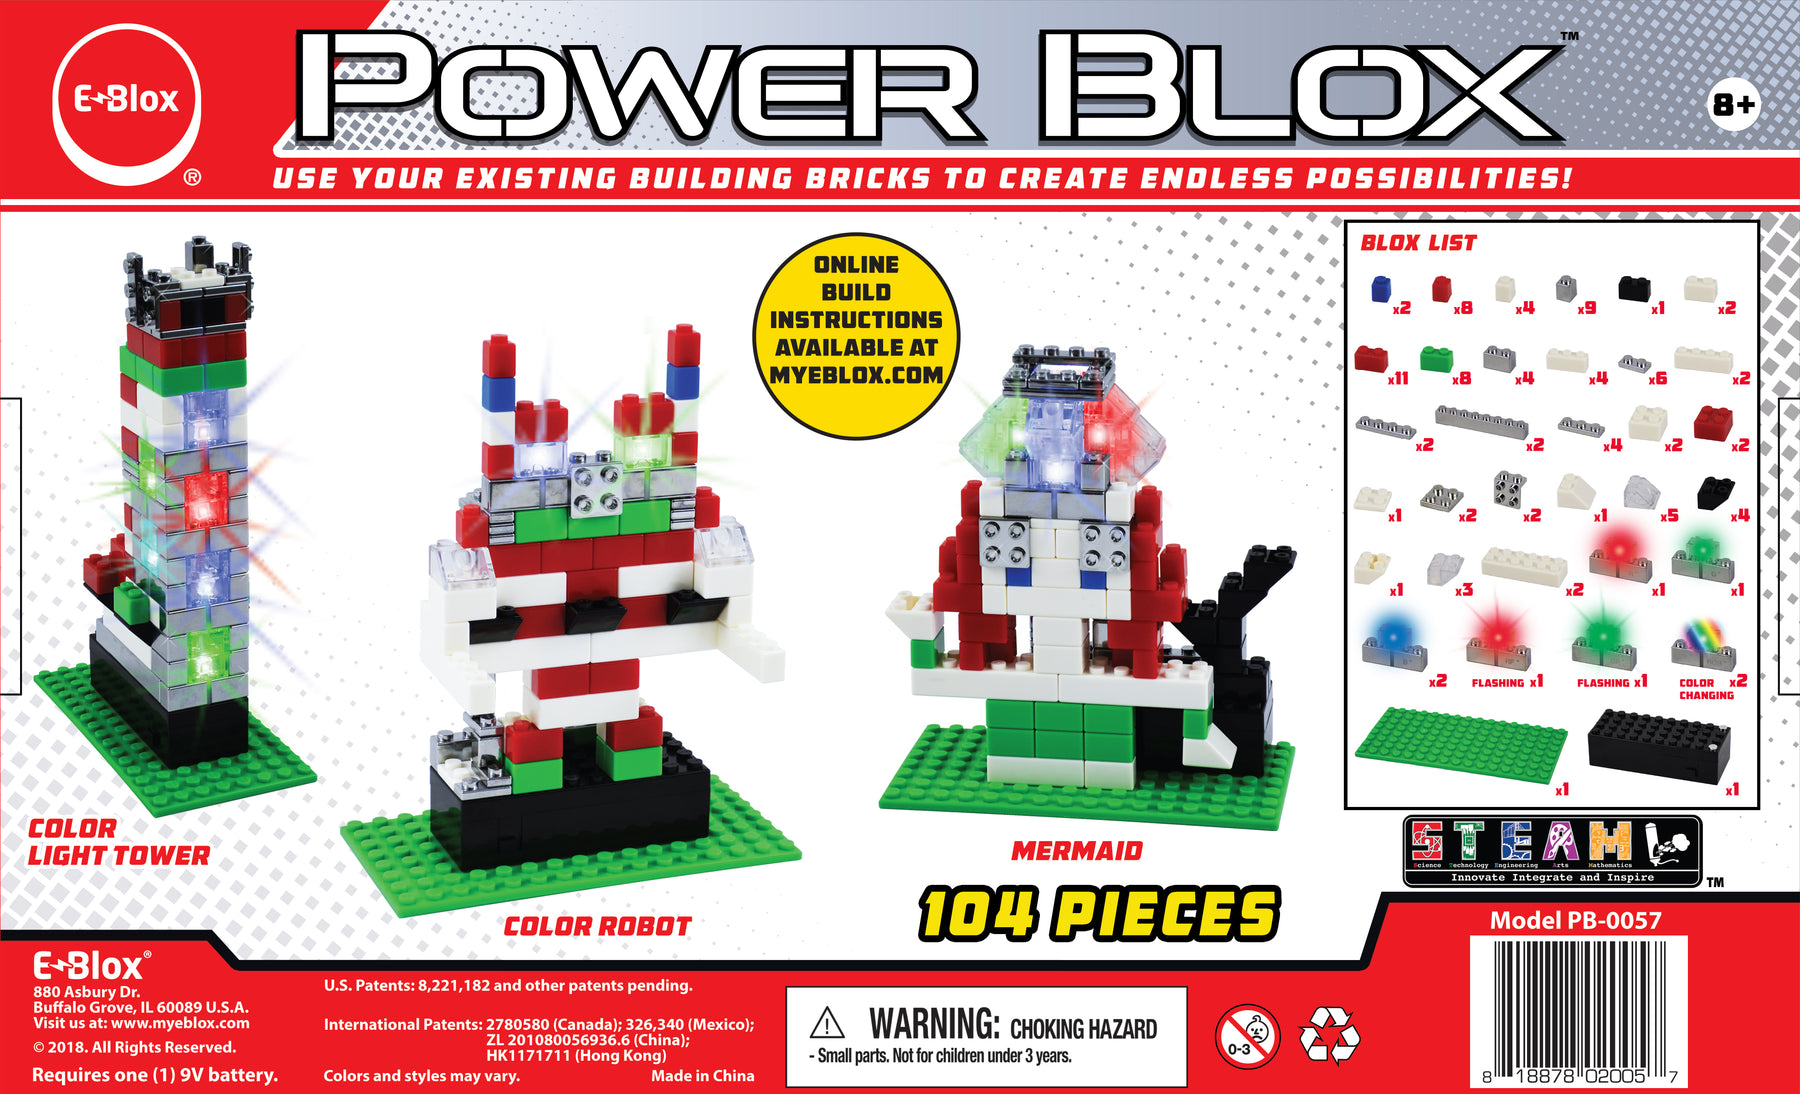 blox lego sets